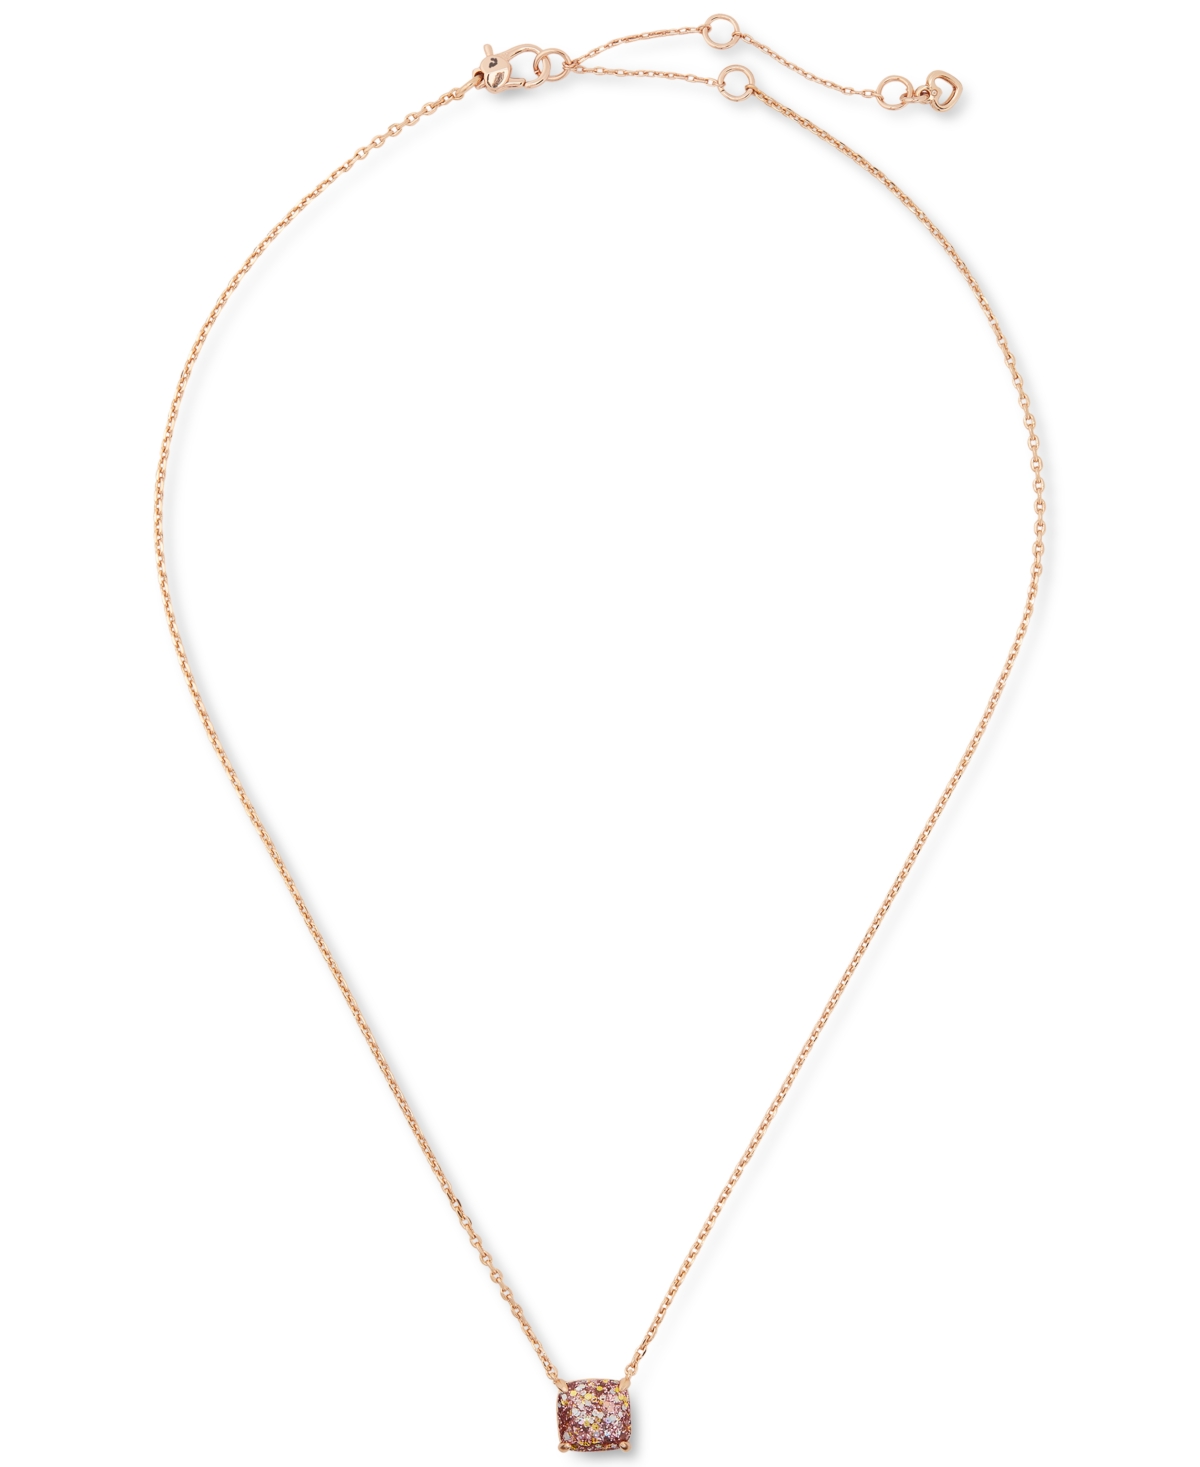 Gold-Tone Square Glitter Stone Mini Pendant Necklace, 17" + 3" extender - Rose Gold